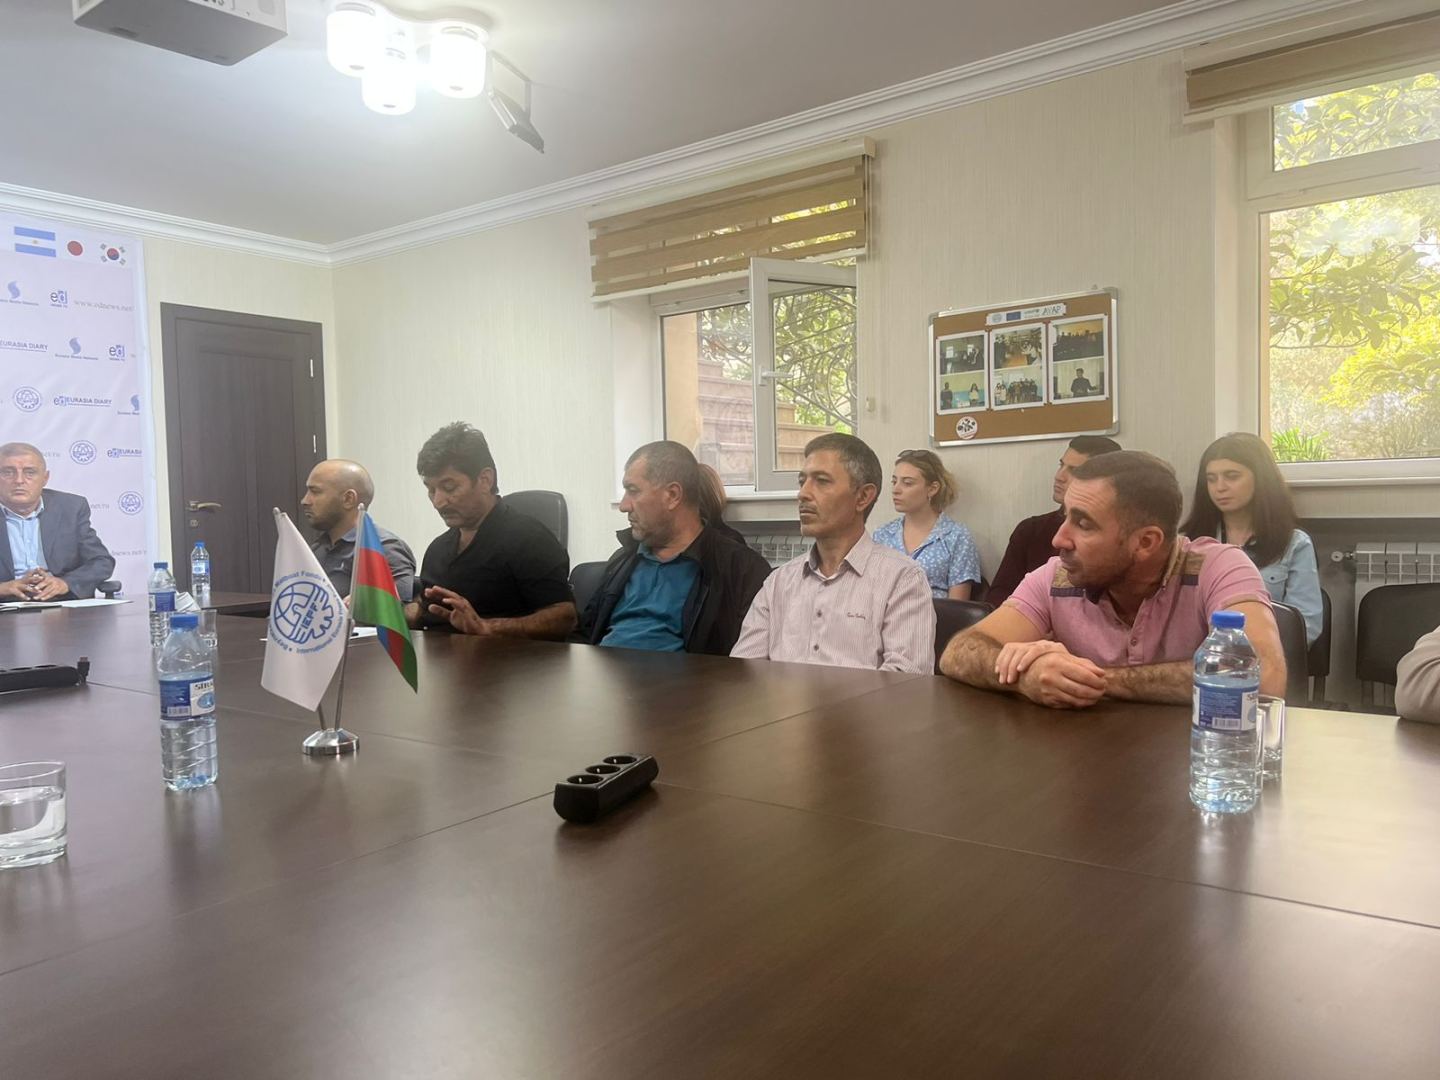 Представители гражданского общества Азербайджана обратились в ООН в связи с провокациями армян (ФОТО)